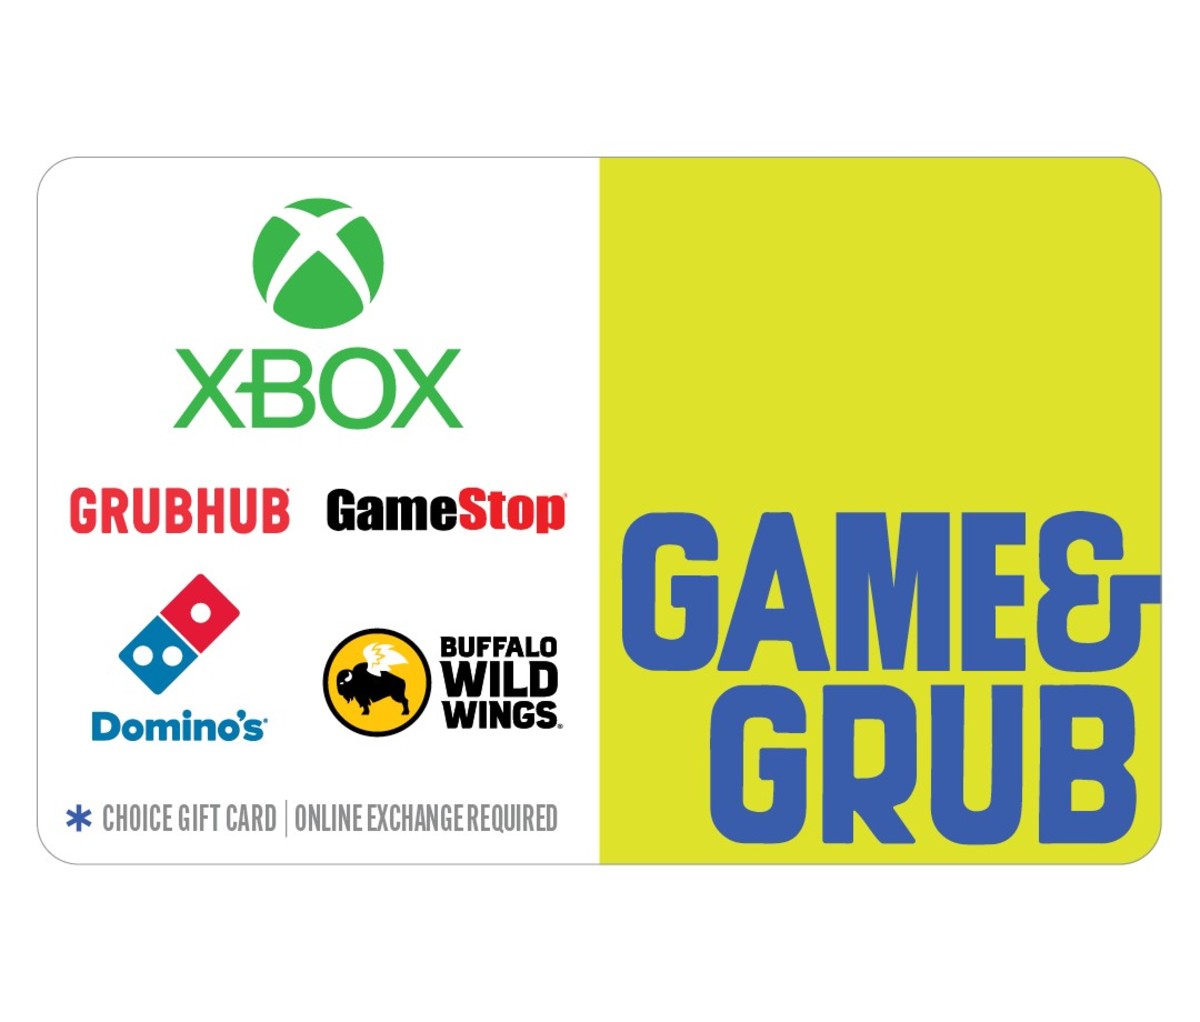 Closeup of Game & Grub gift card featuring namesake brand and affiliate brands: XBOX, GrubHub, GameStop, Dominos, Buffalo Wild Wings